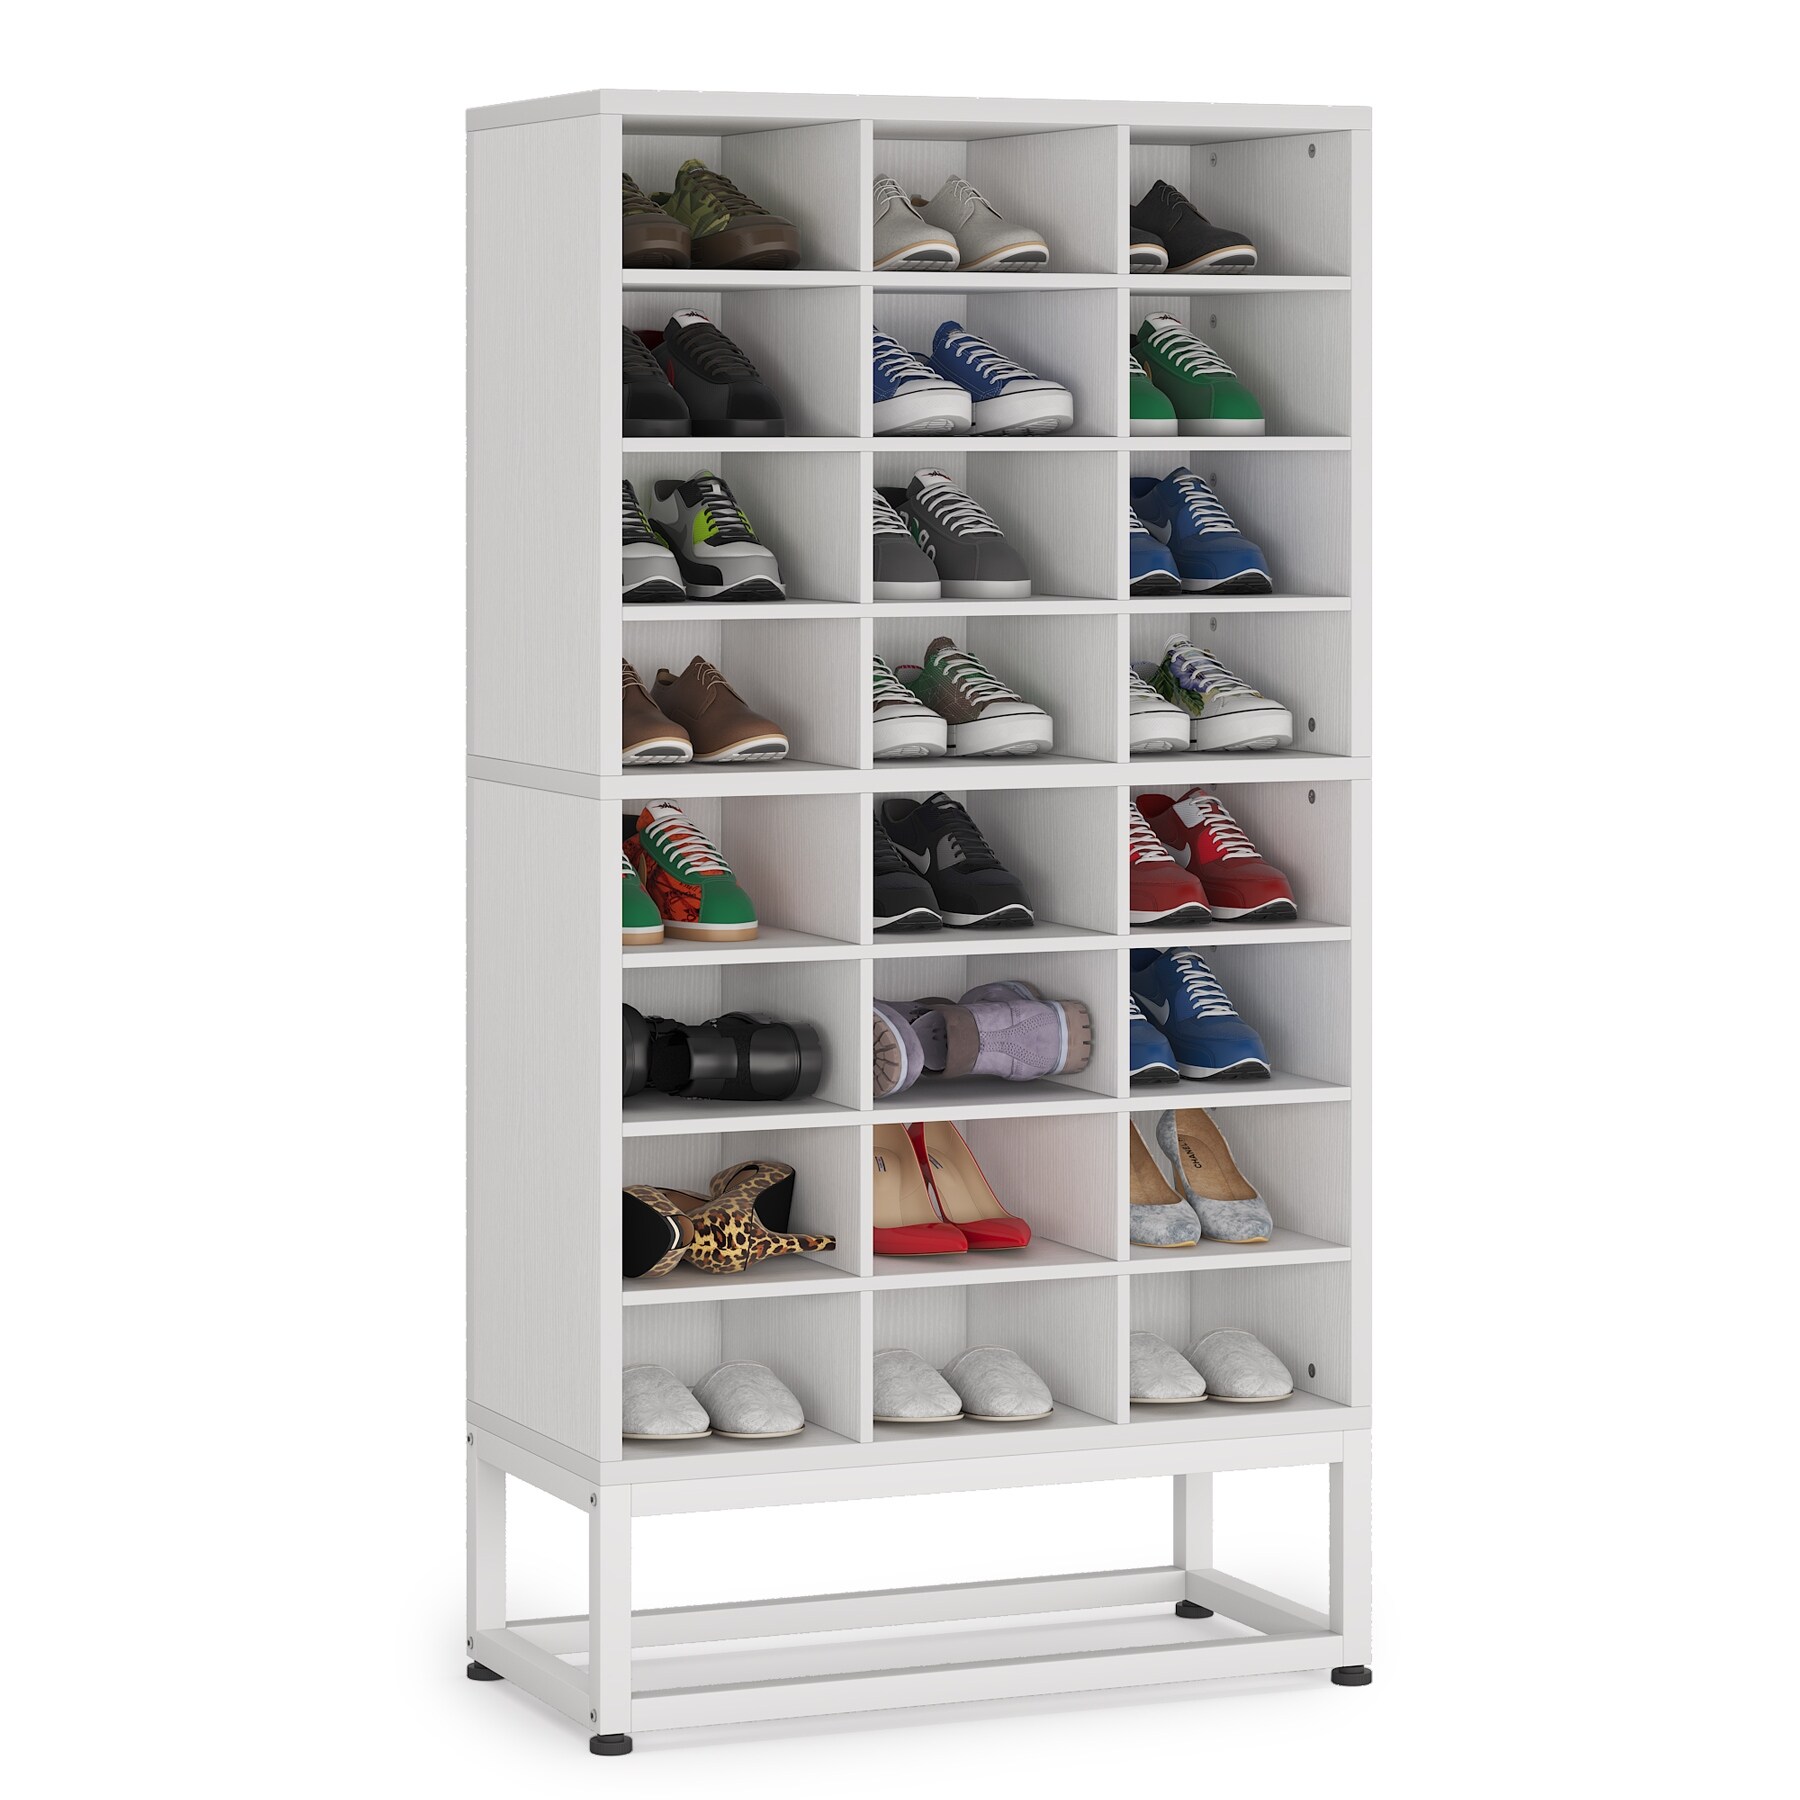 https://ak1.ostkcdn.com/images/products/is/images/direct/6533ea3d56cc9f3a58d3b2e381ac58b6152f093f/White-24-Pair-Shoe-Storage-Cabinet%2C-8-Tier-Feestanding-Cube-Shoe-Rack-Closet-Organizers-for-Bedroom%2C-Hallway.jpg